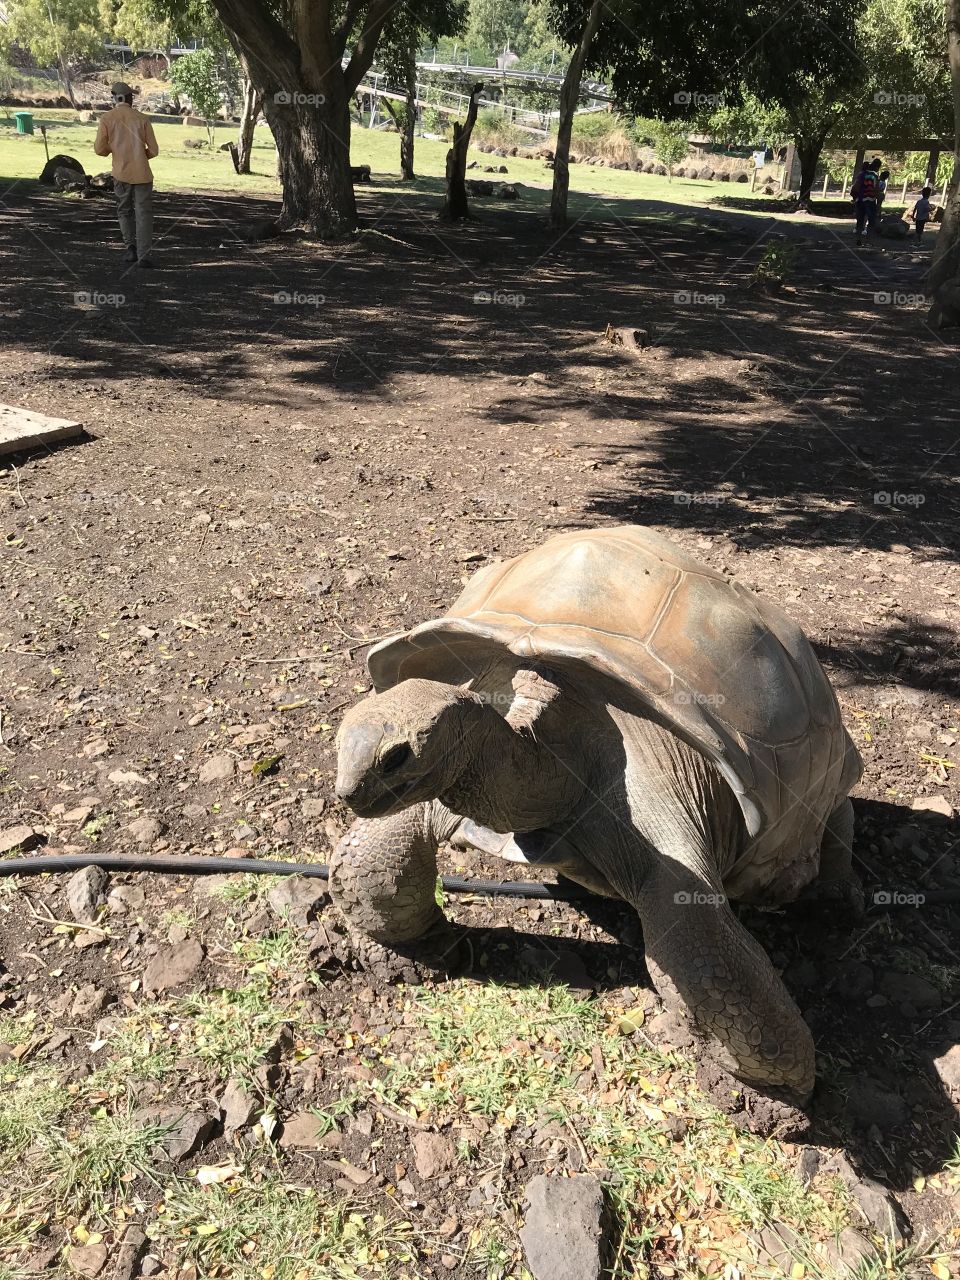 Turtle @ Casela Park, Mauritius 